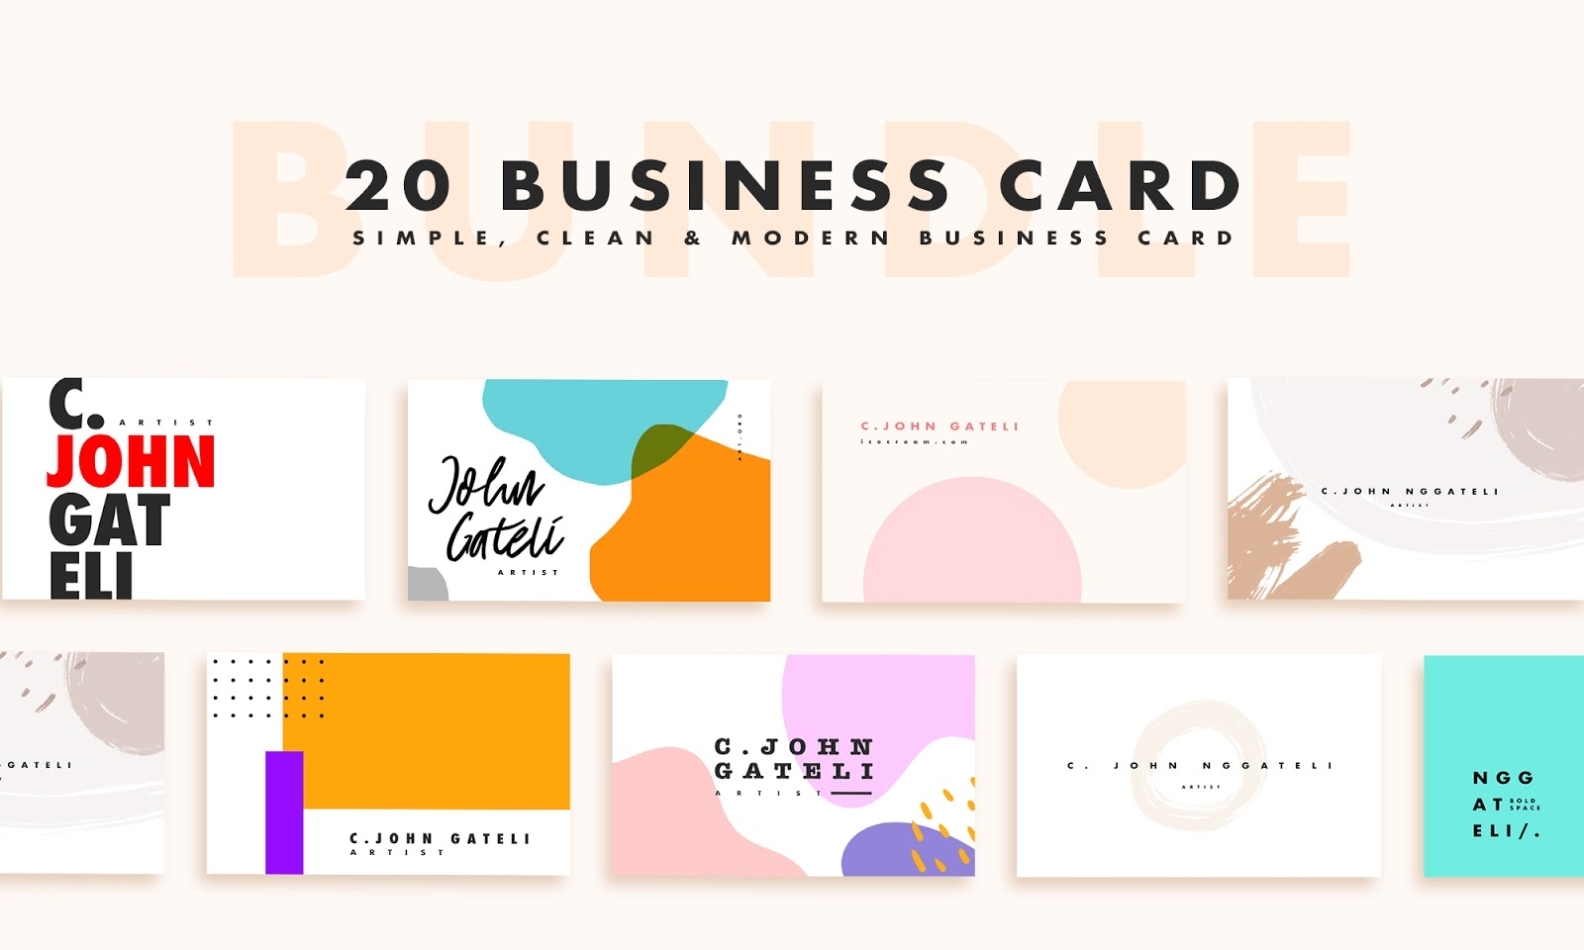 20 Simple Business Card Photoshop Template - Psd File Throughout Business Card Size Photoshop Template